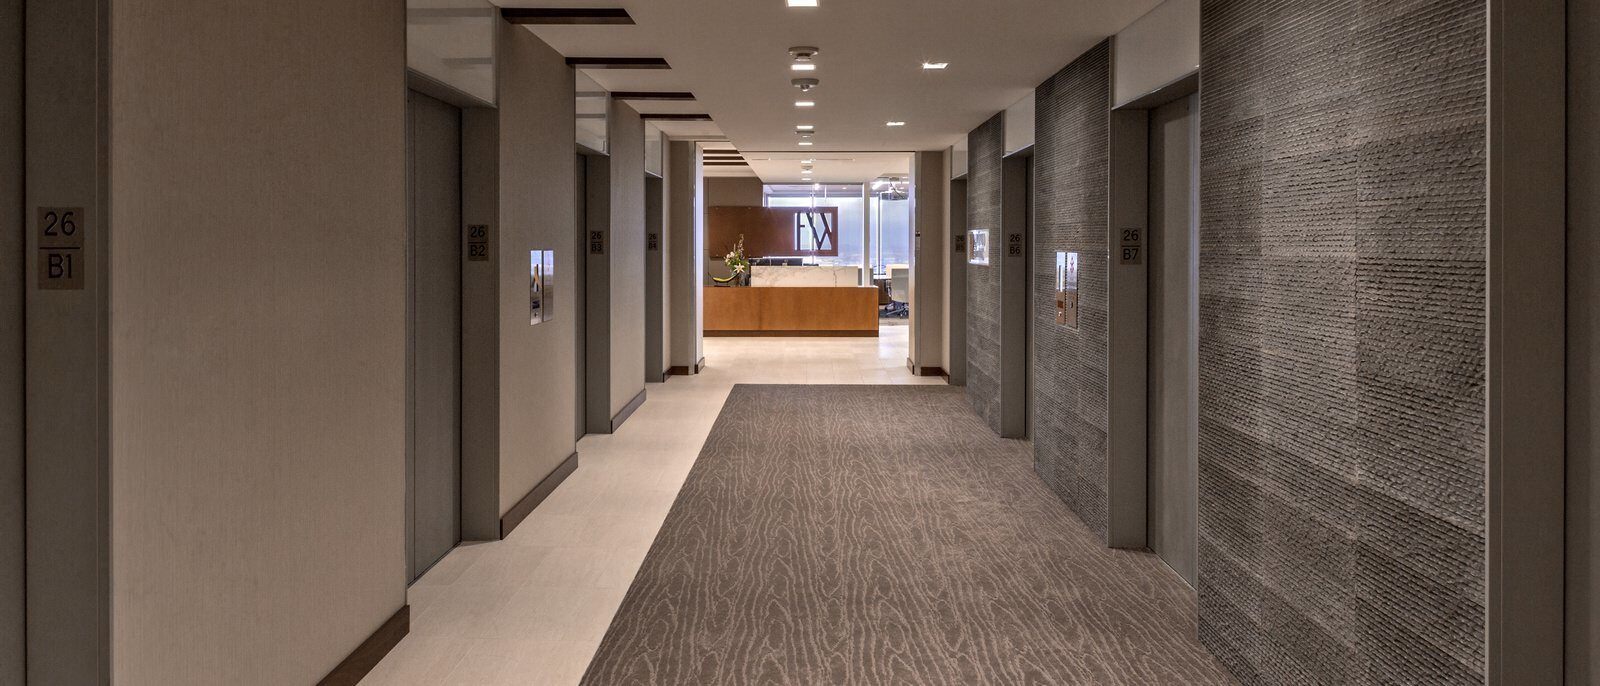 Hallway of elevators leading toward a receptionist desk.